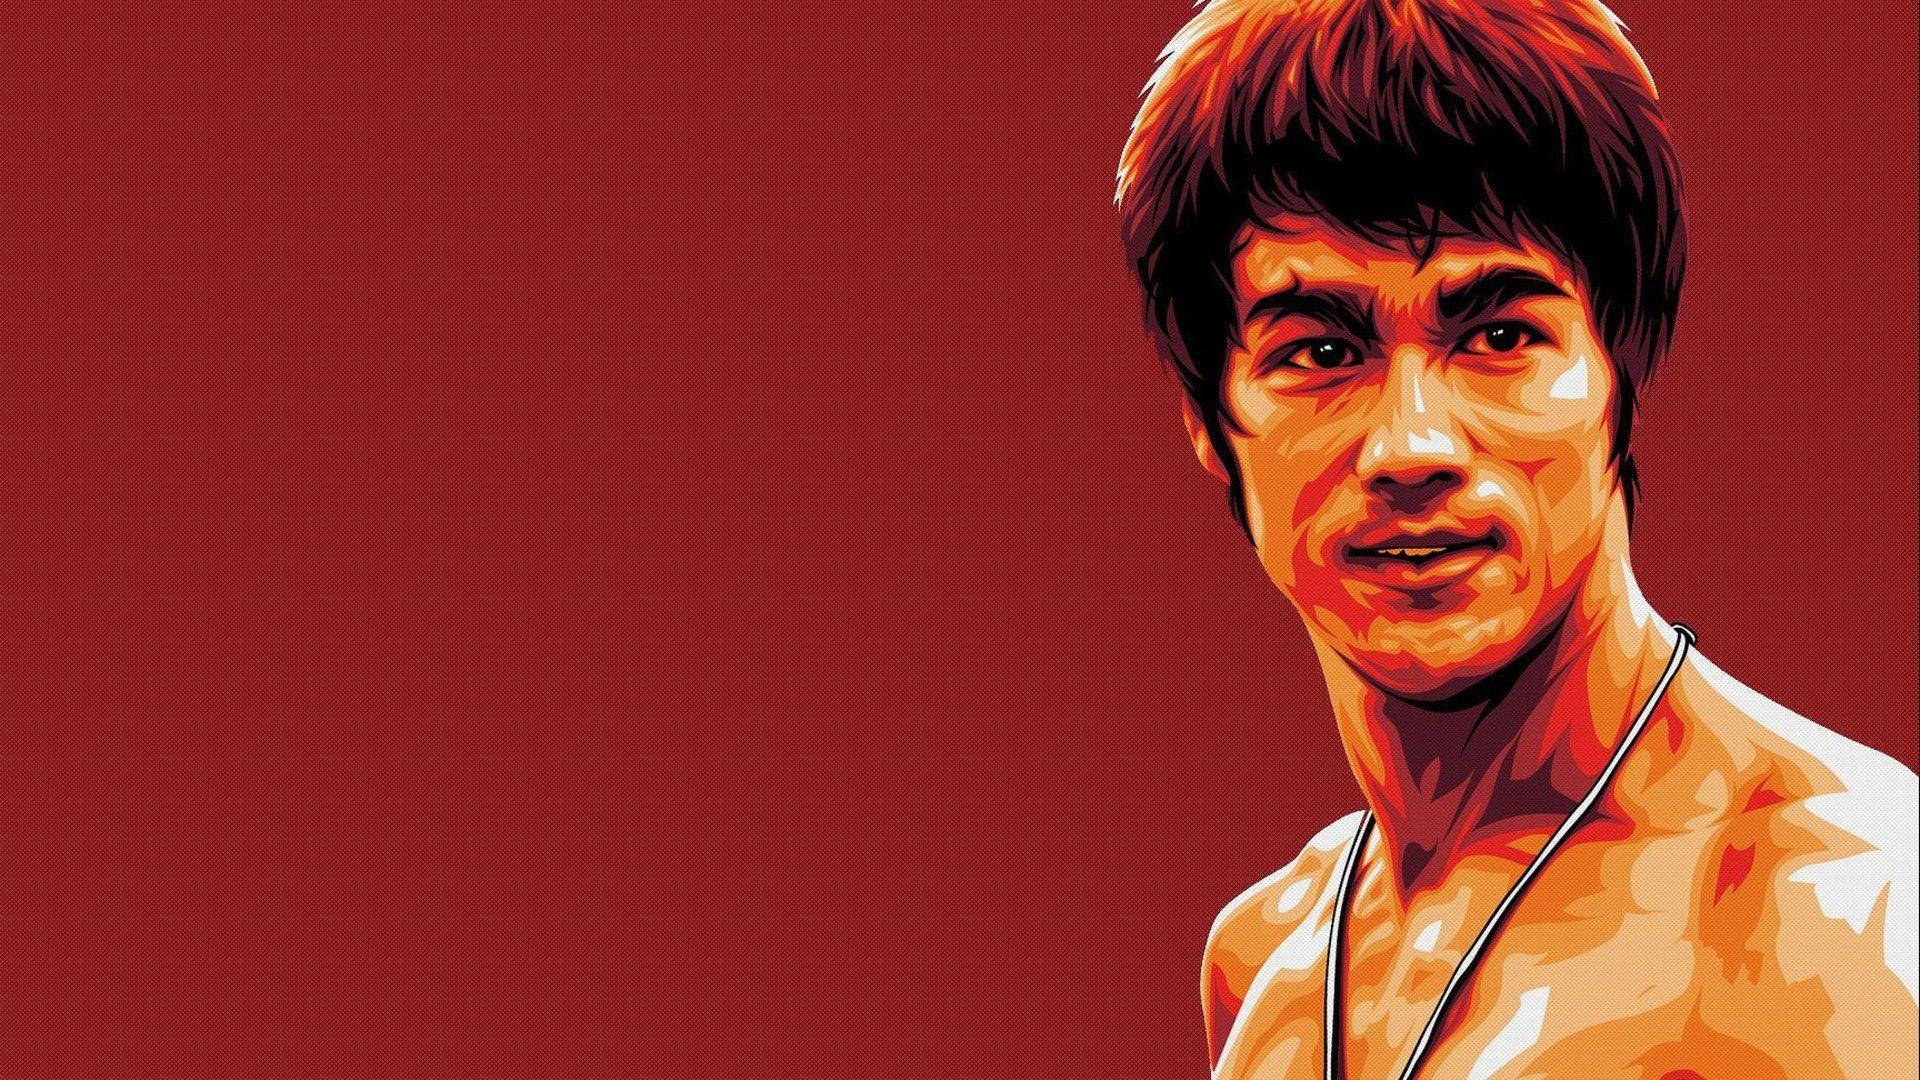 Bruce Lee picturex1080 HD Celebrity wallpaper free